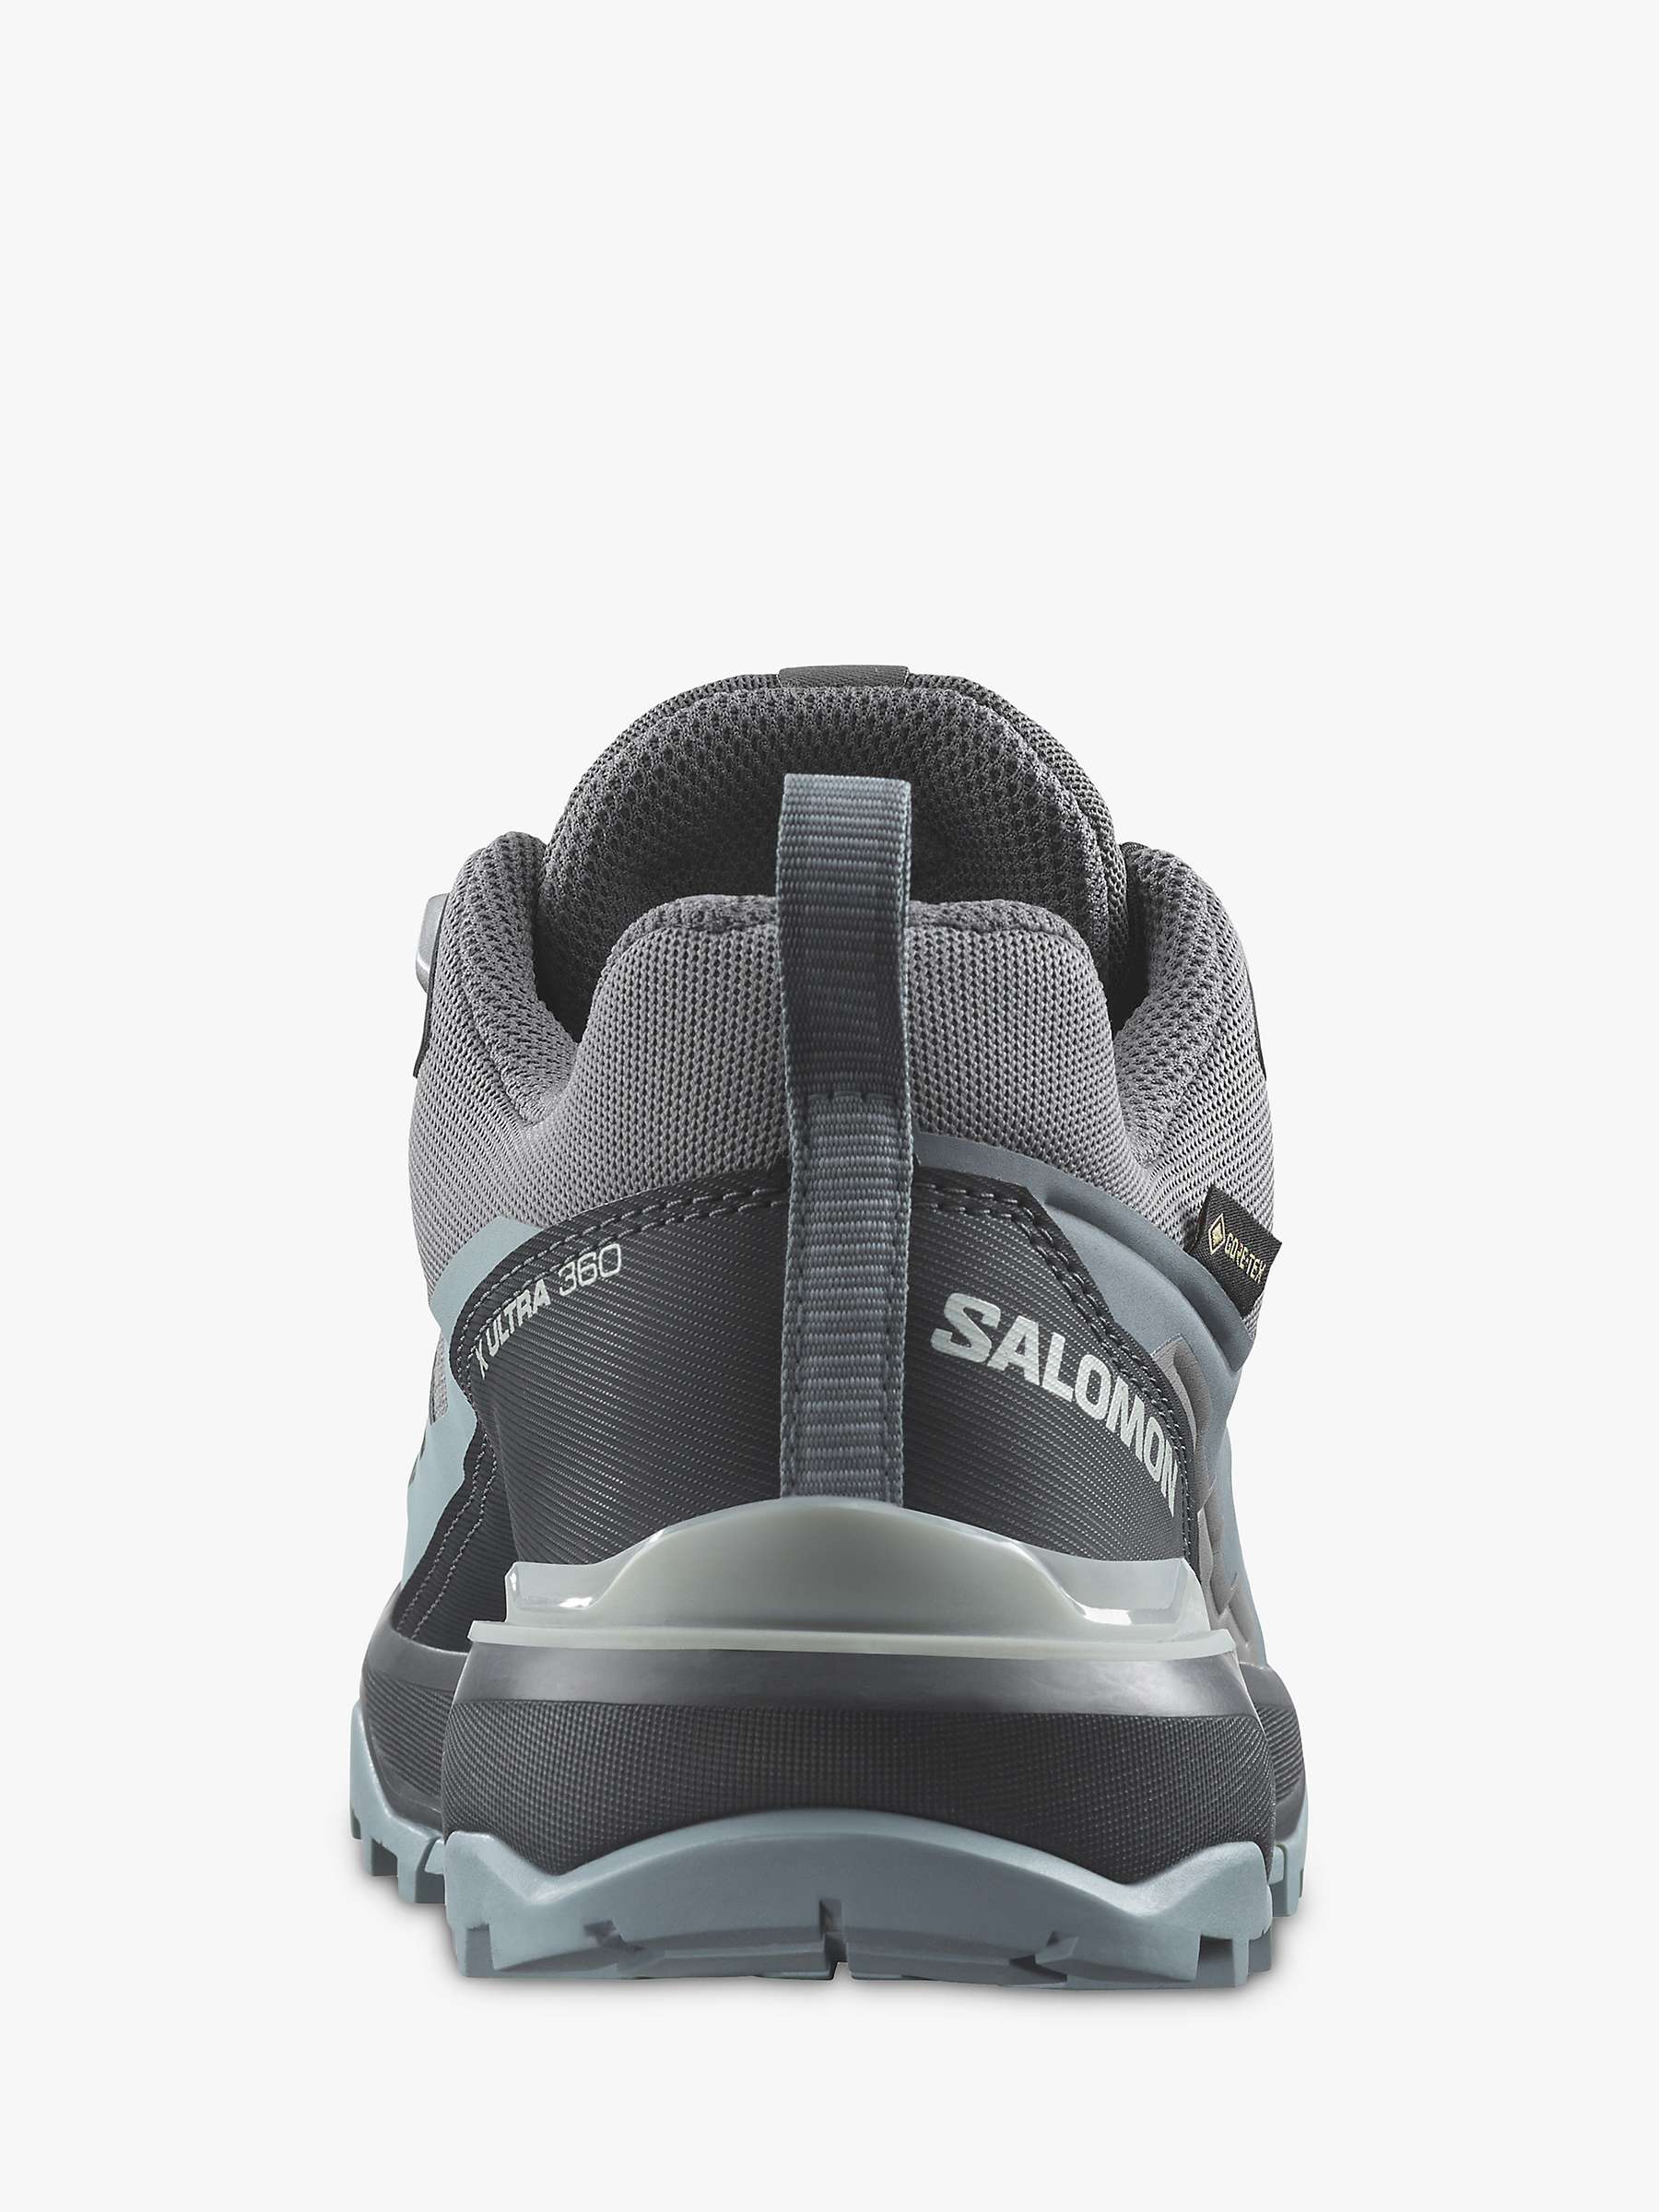 Buy Salomon X Ultra 360 Gore-Tex Women's Sports Shoes Online at johnlewis.com